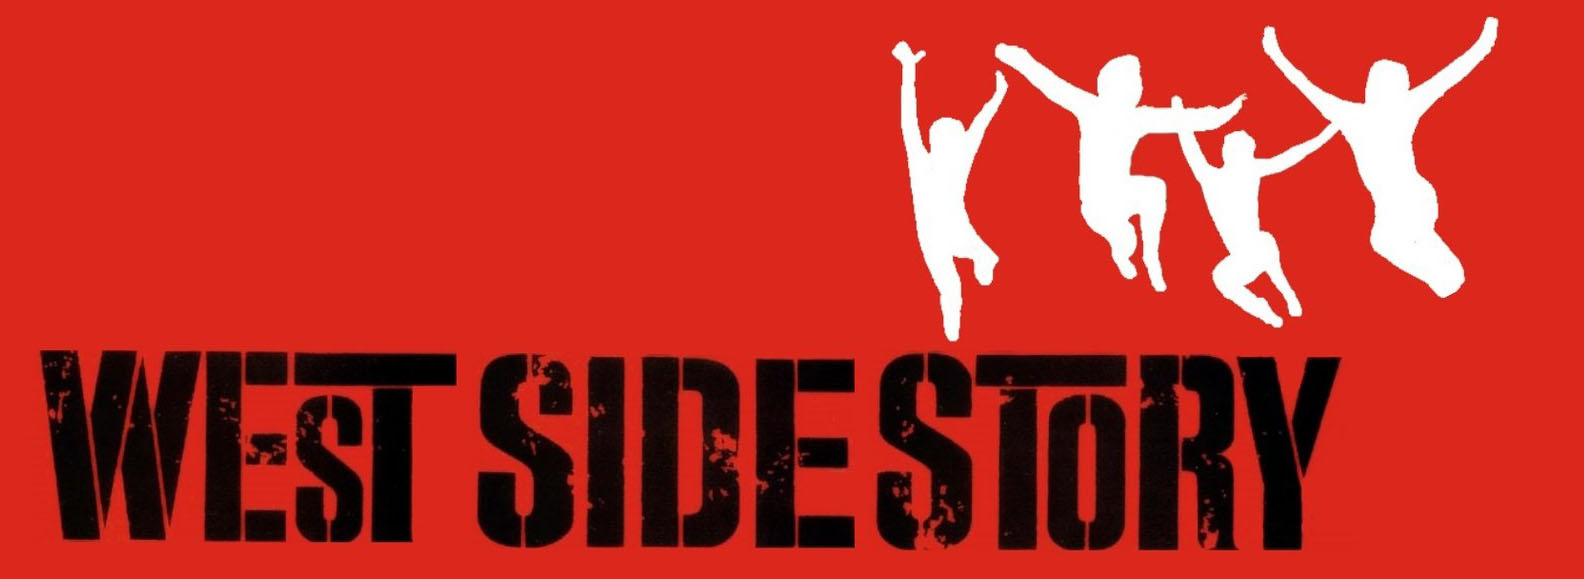 West Side Story HD wallpapers, Desktop wallpaper - most viewed